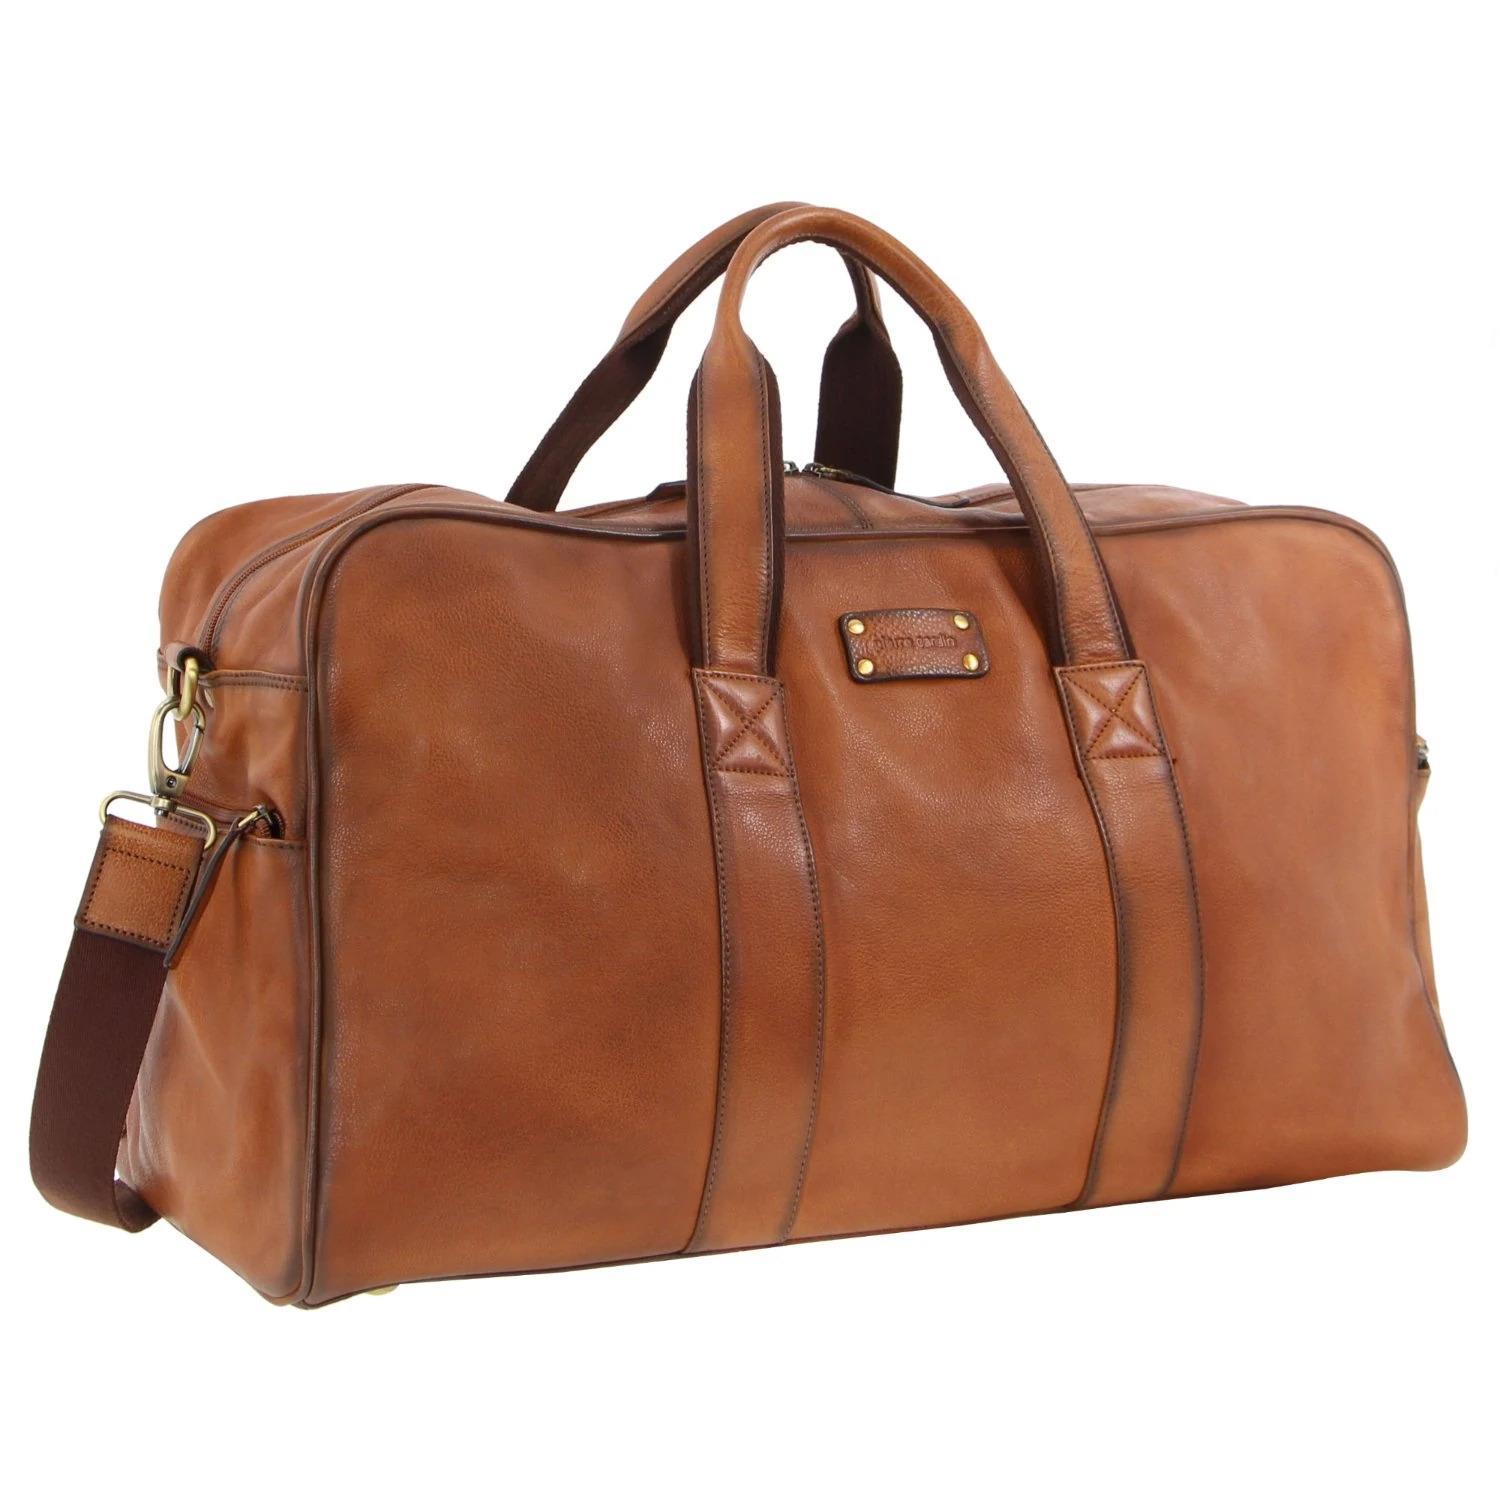 Pierre Cardin Rustic Leather Travel Bag Overnight Business - Cognac